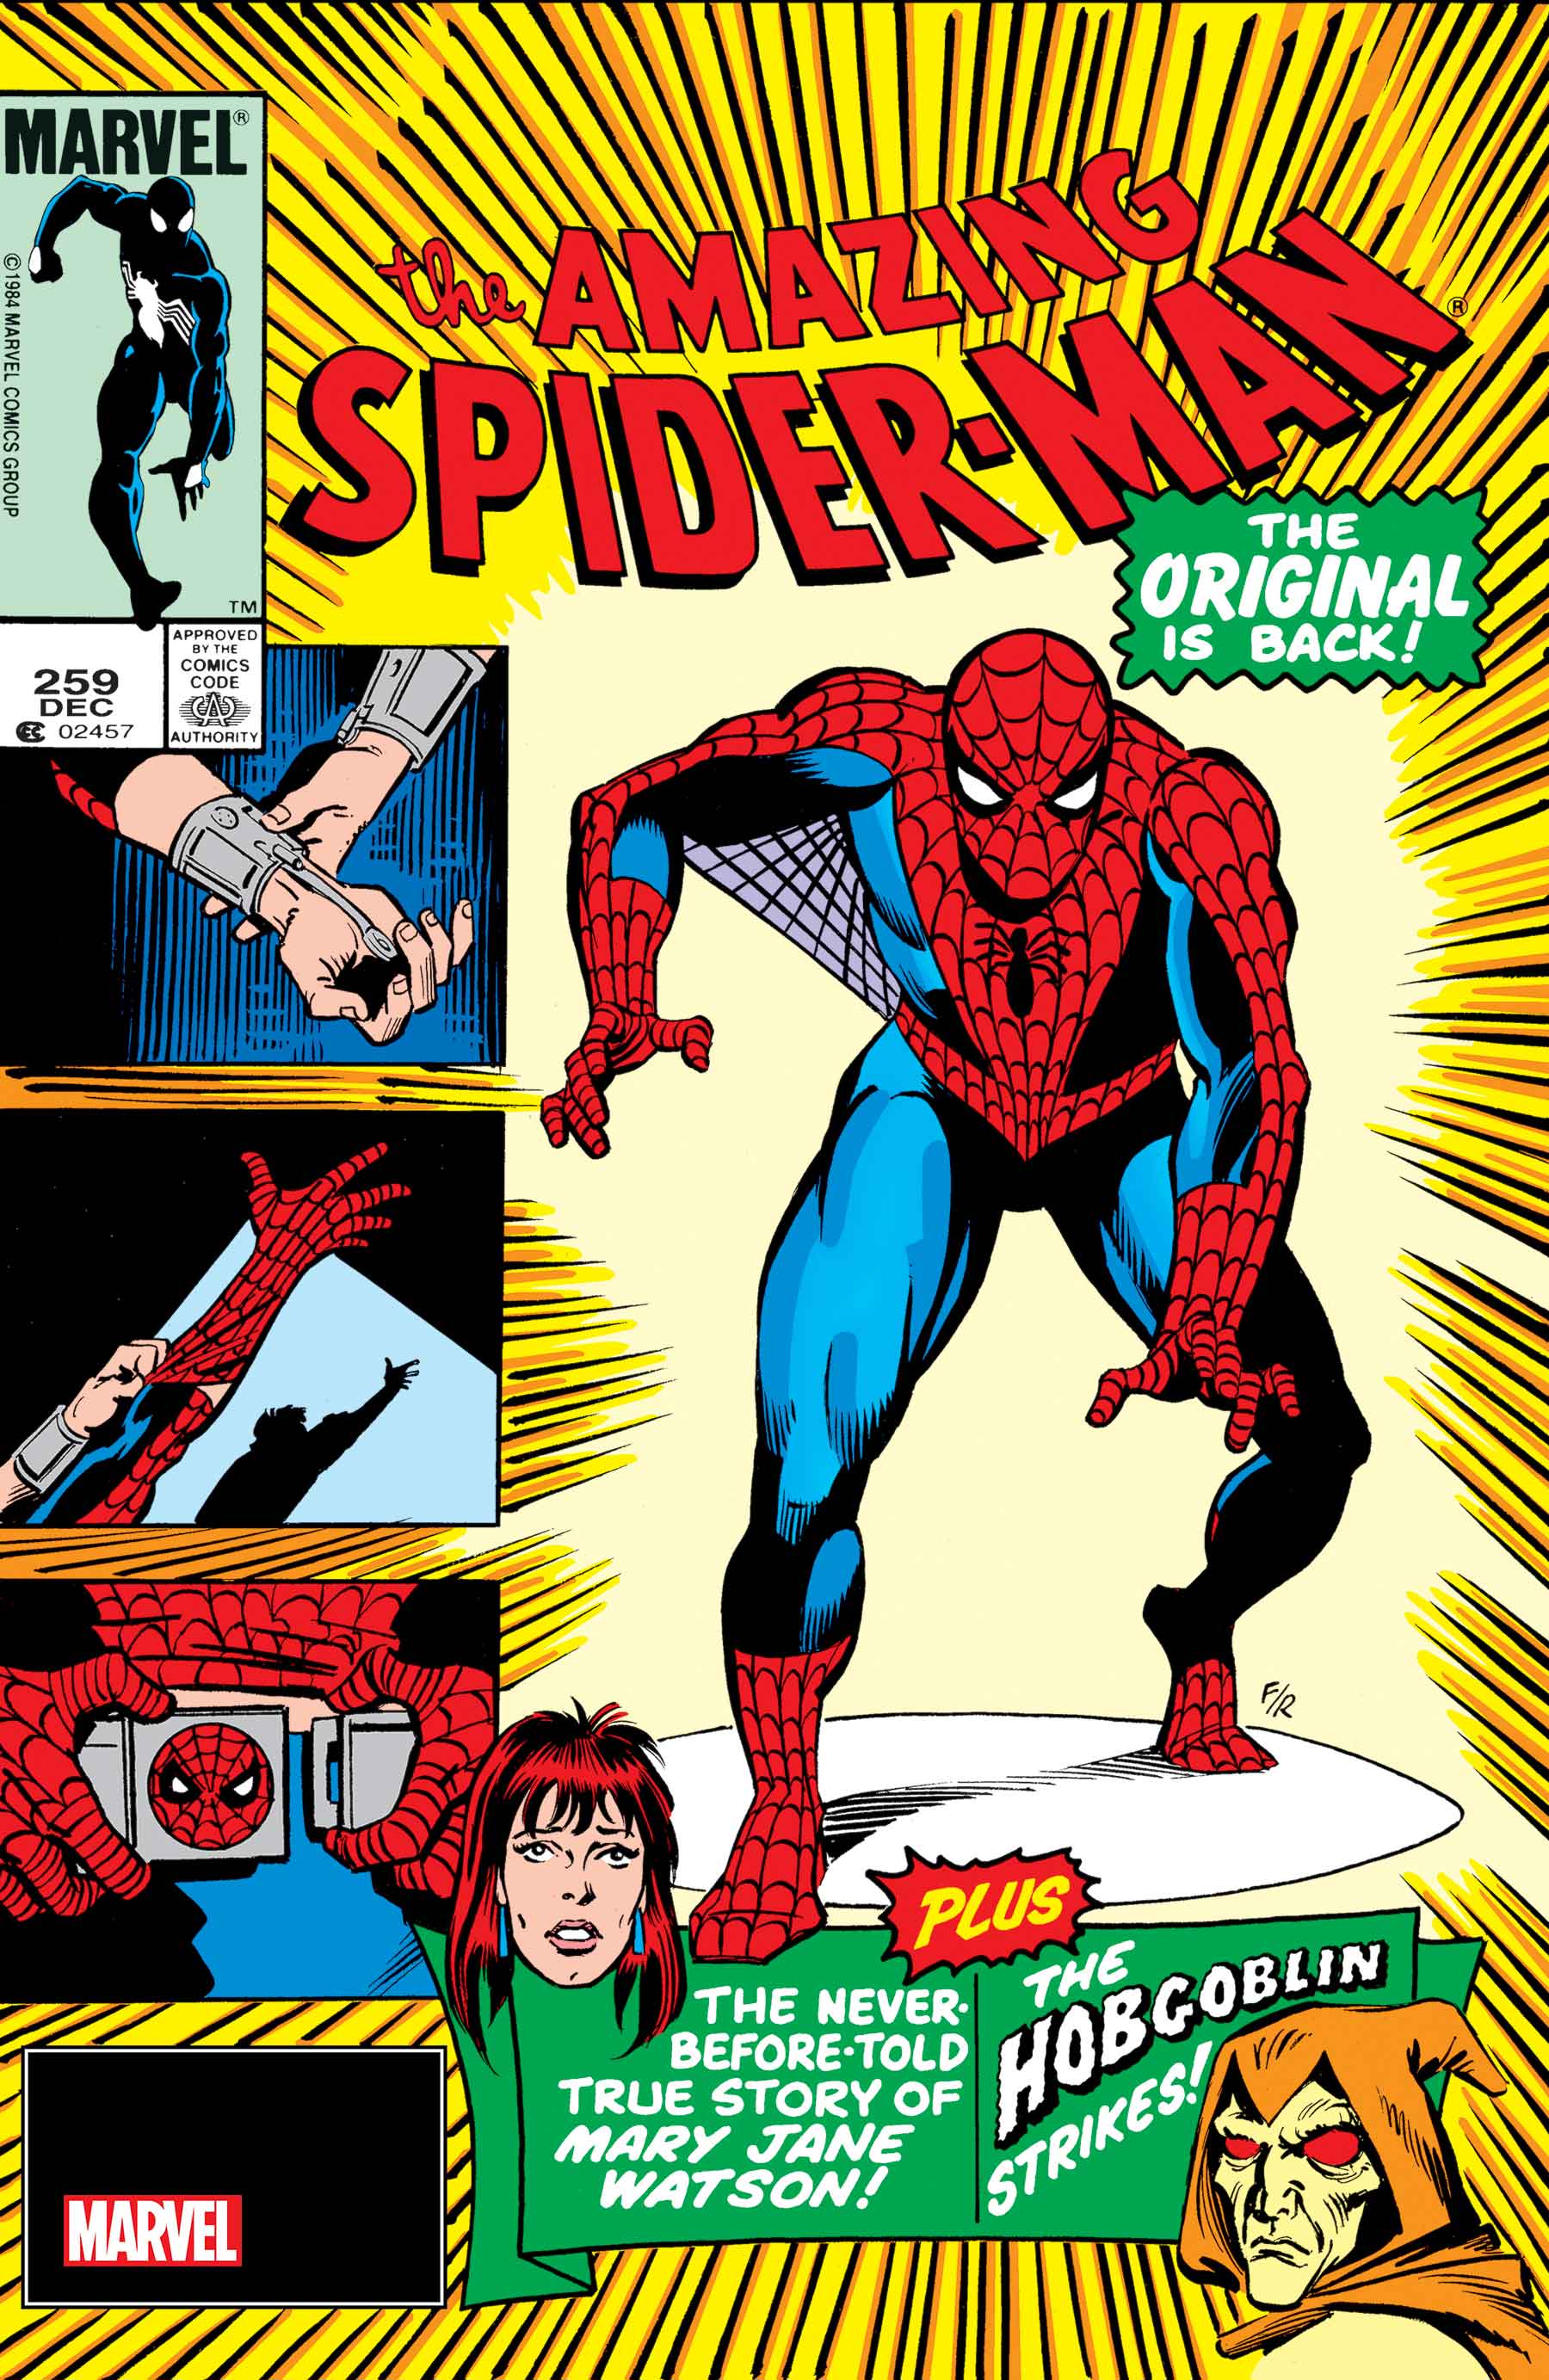 The Amazing Spider-Man (1963) #259